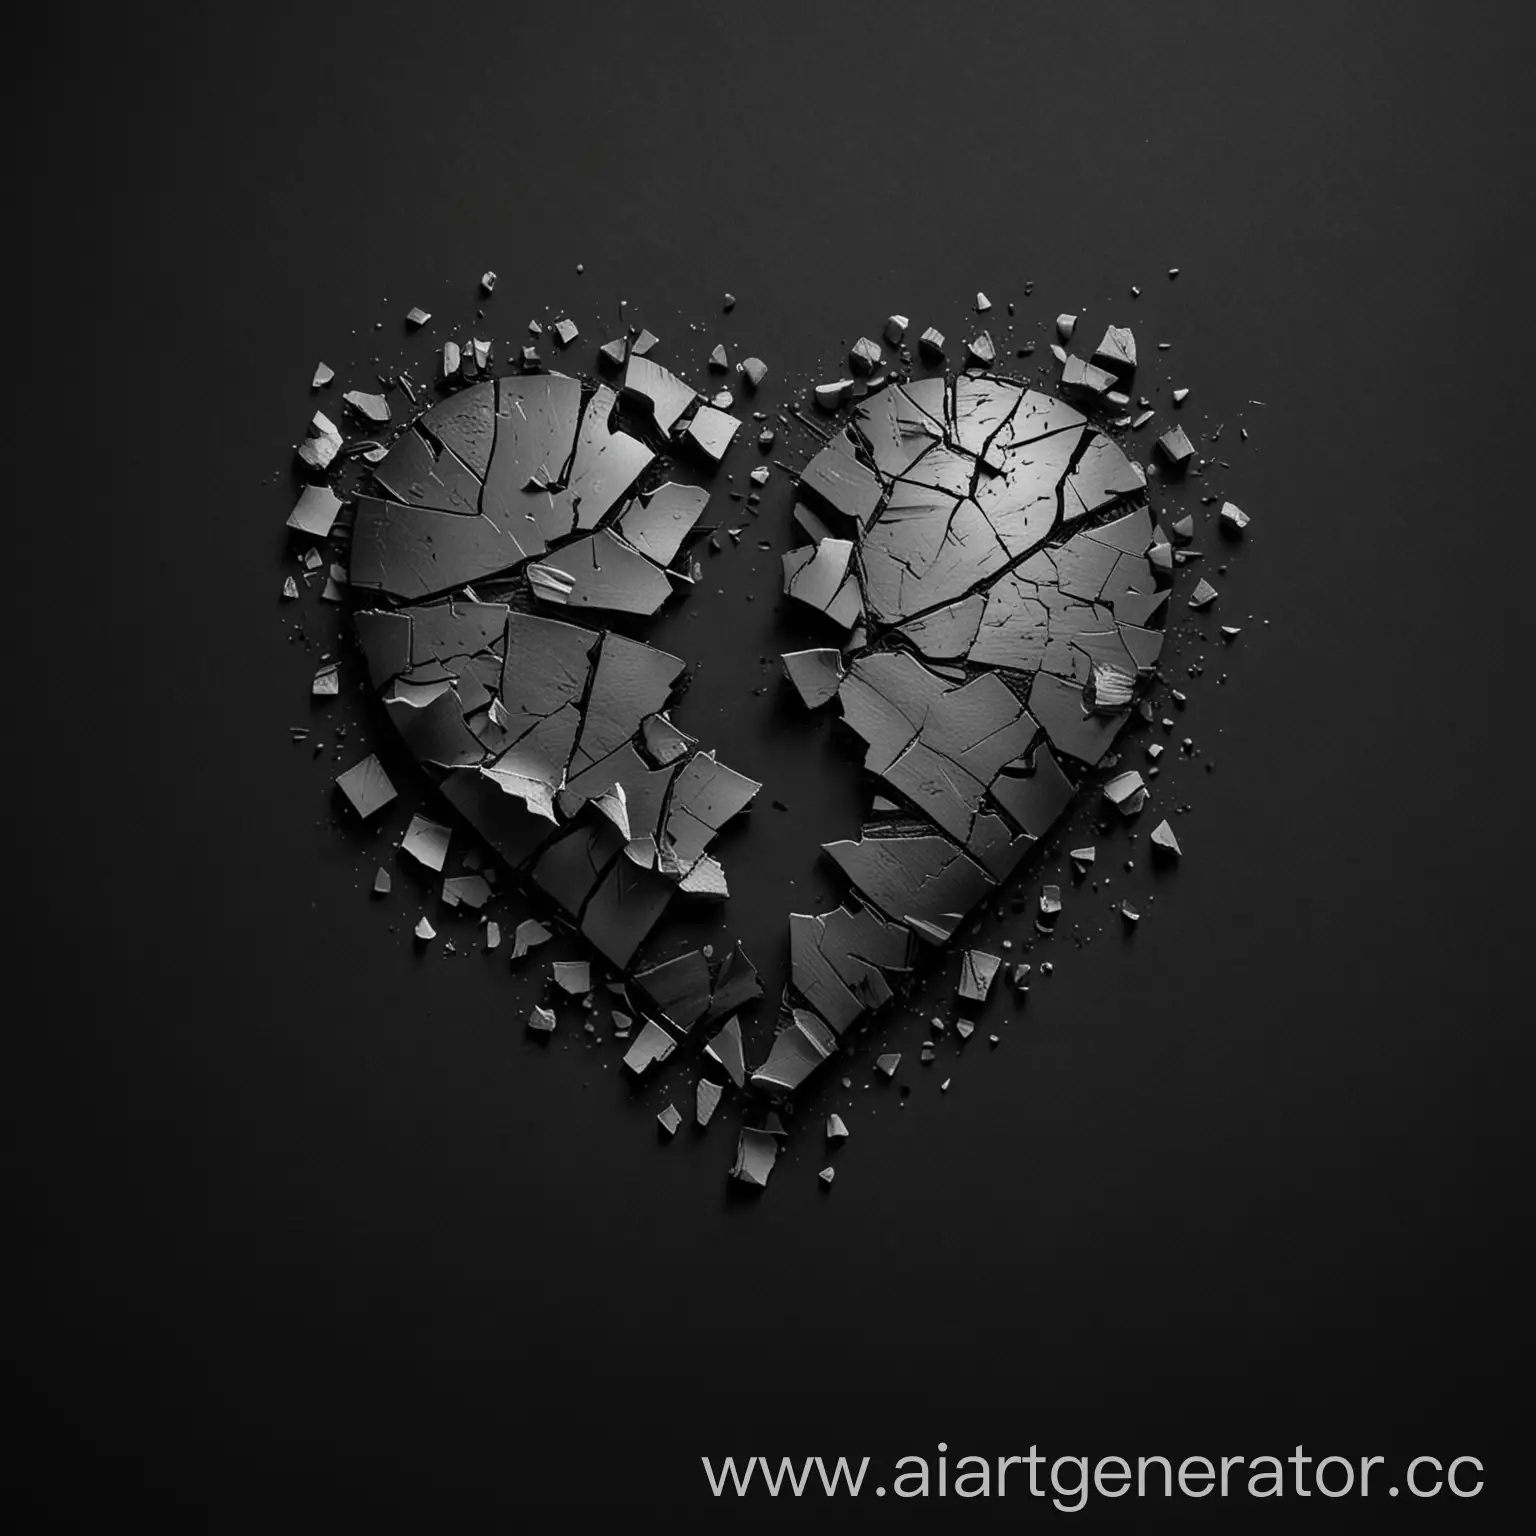 Broken-Heart-on-Black-Background-Emotional-Music-Concept-Art